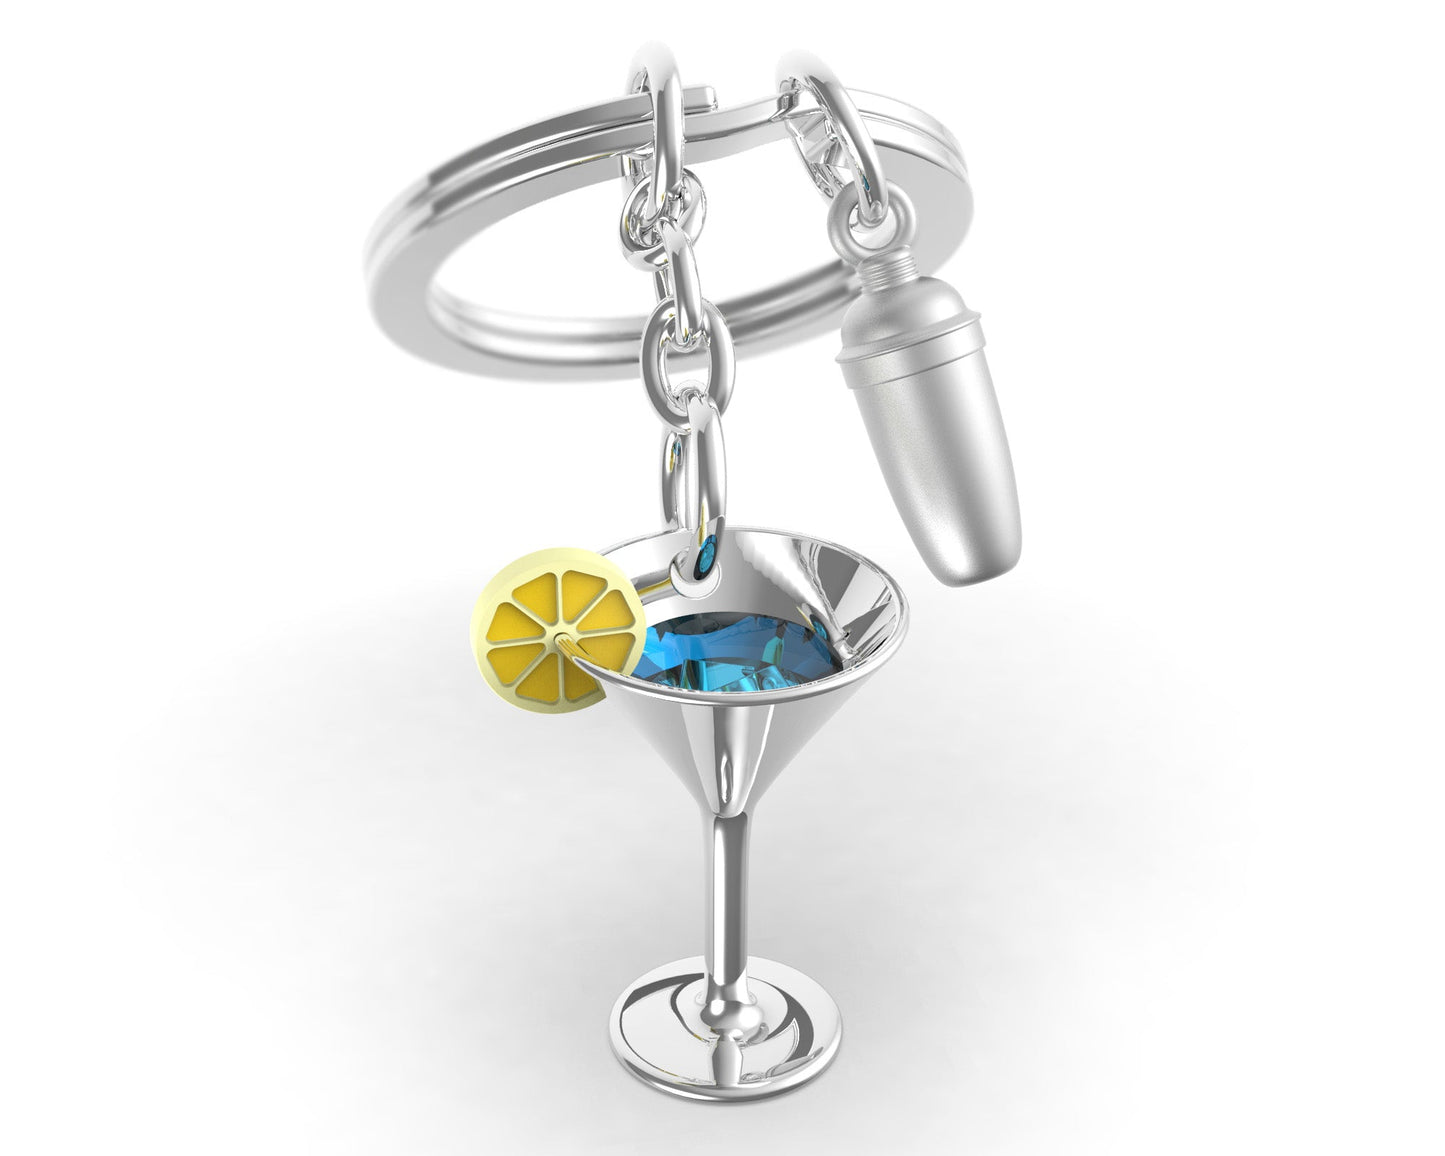 Cocktail key ring